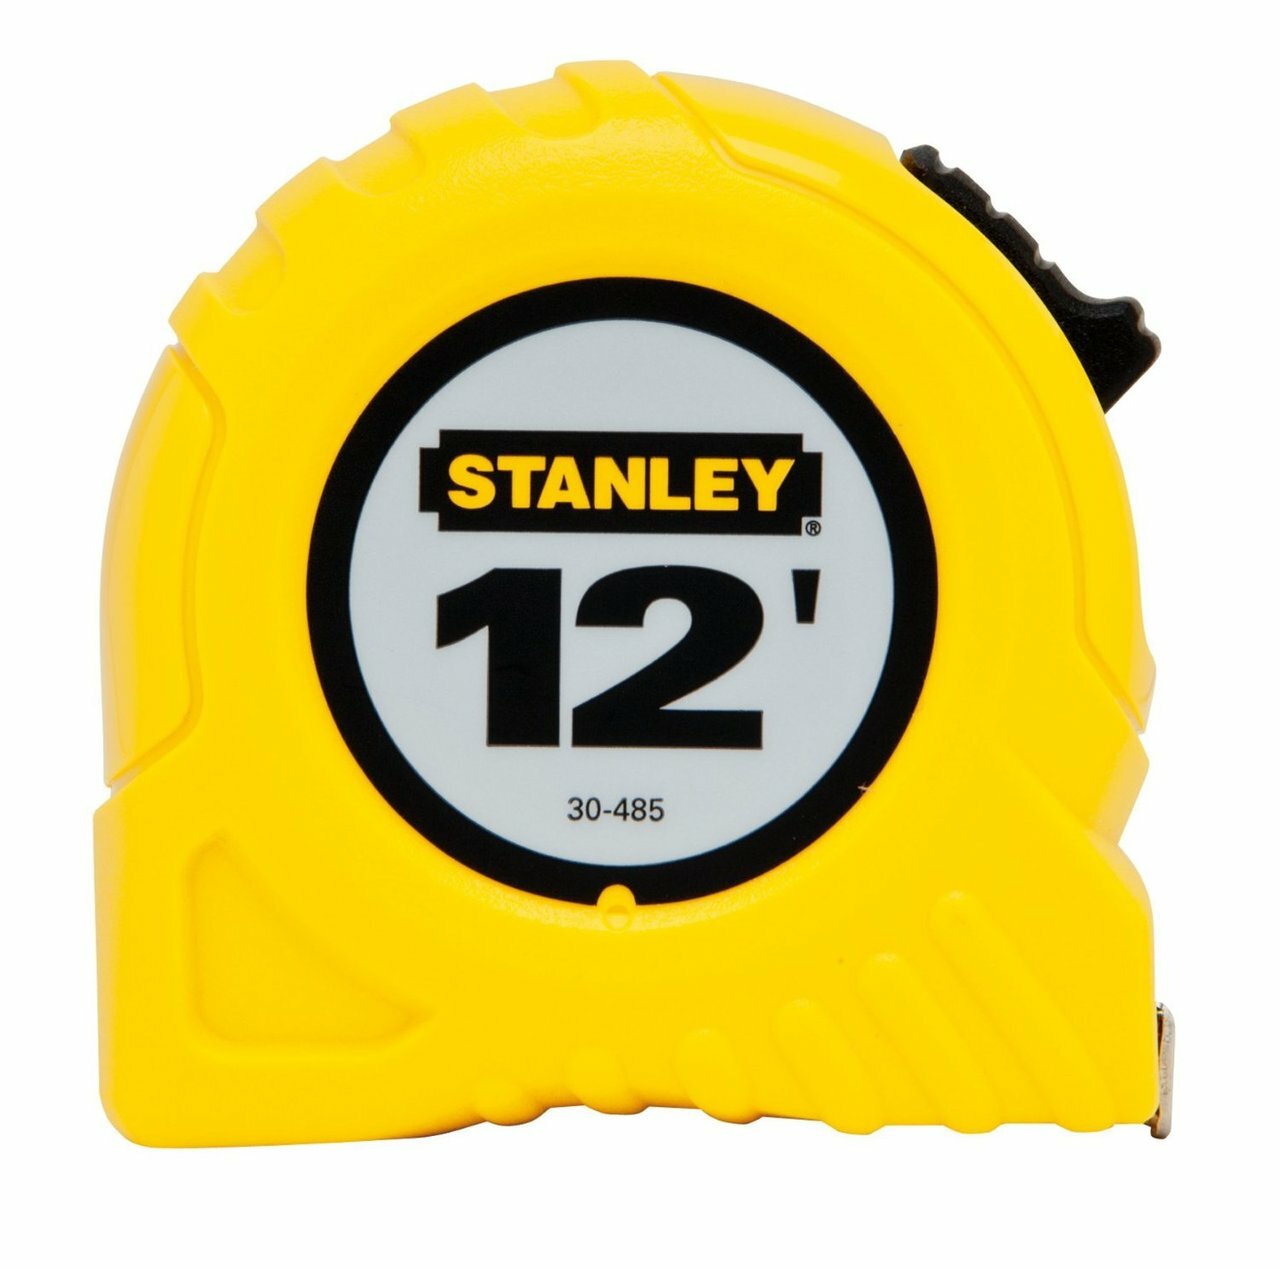 Stanley Measuring Tape - 12' x 1/2"